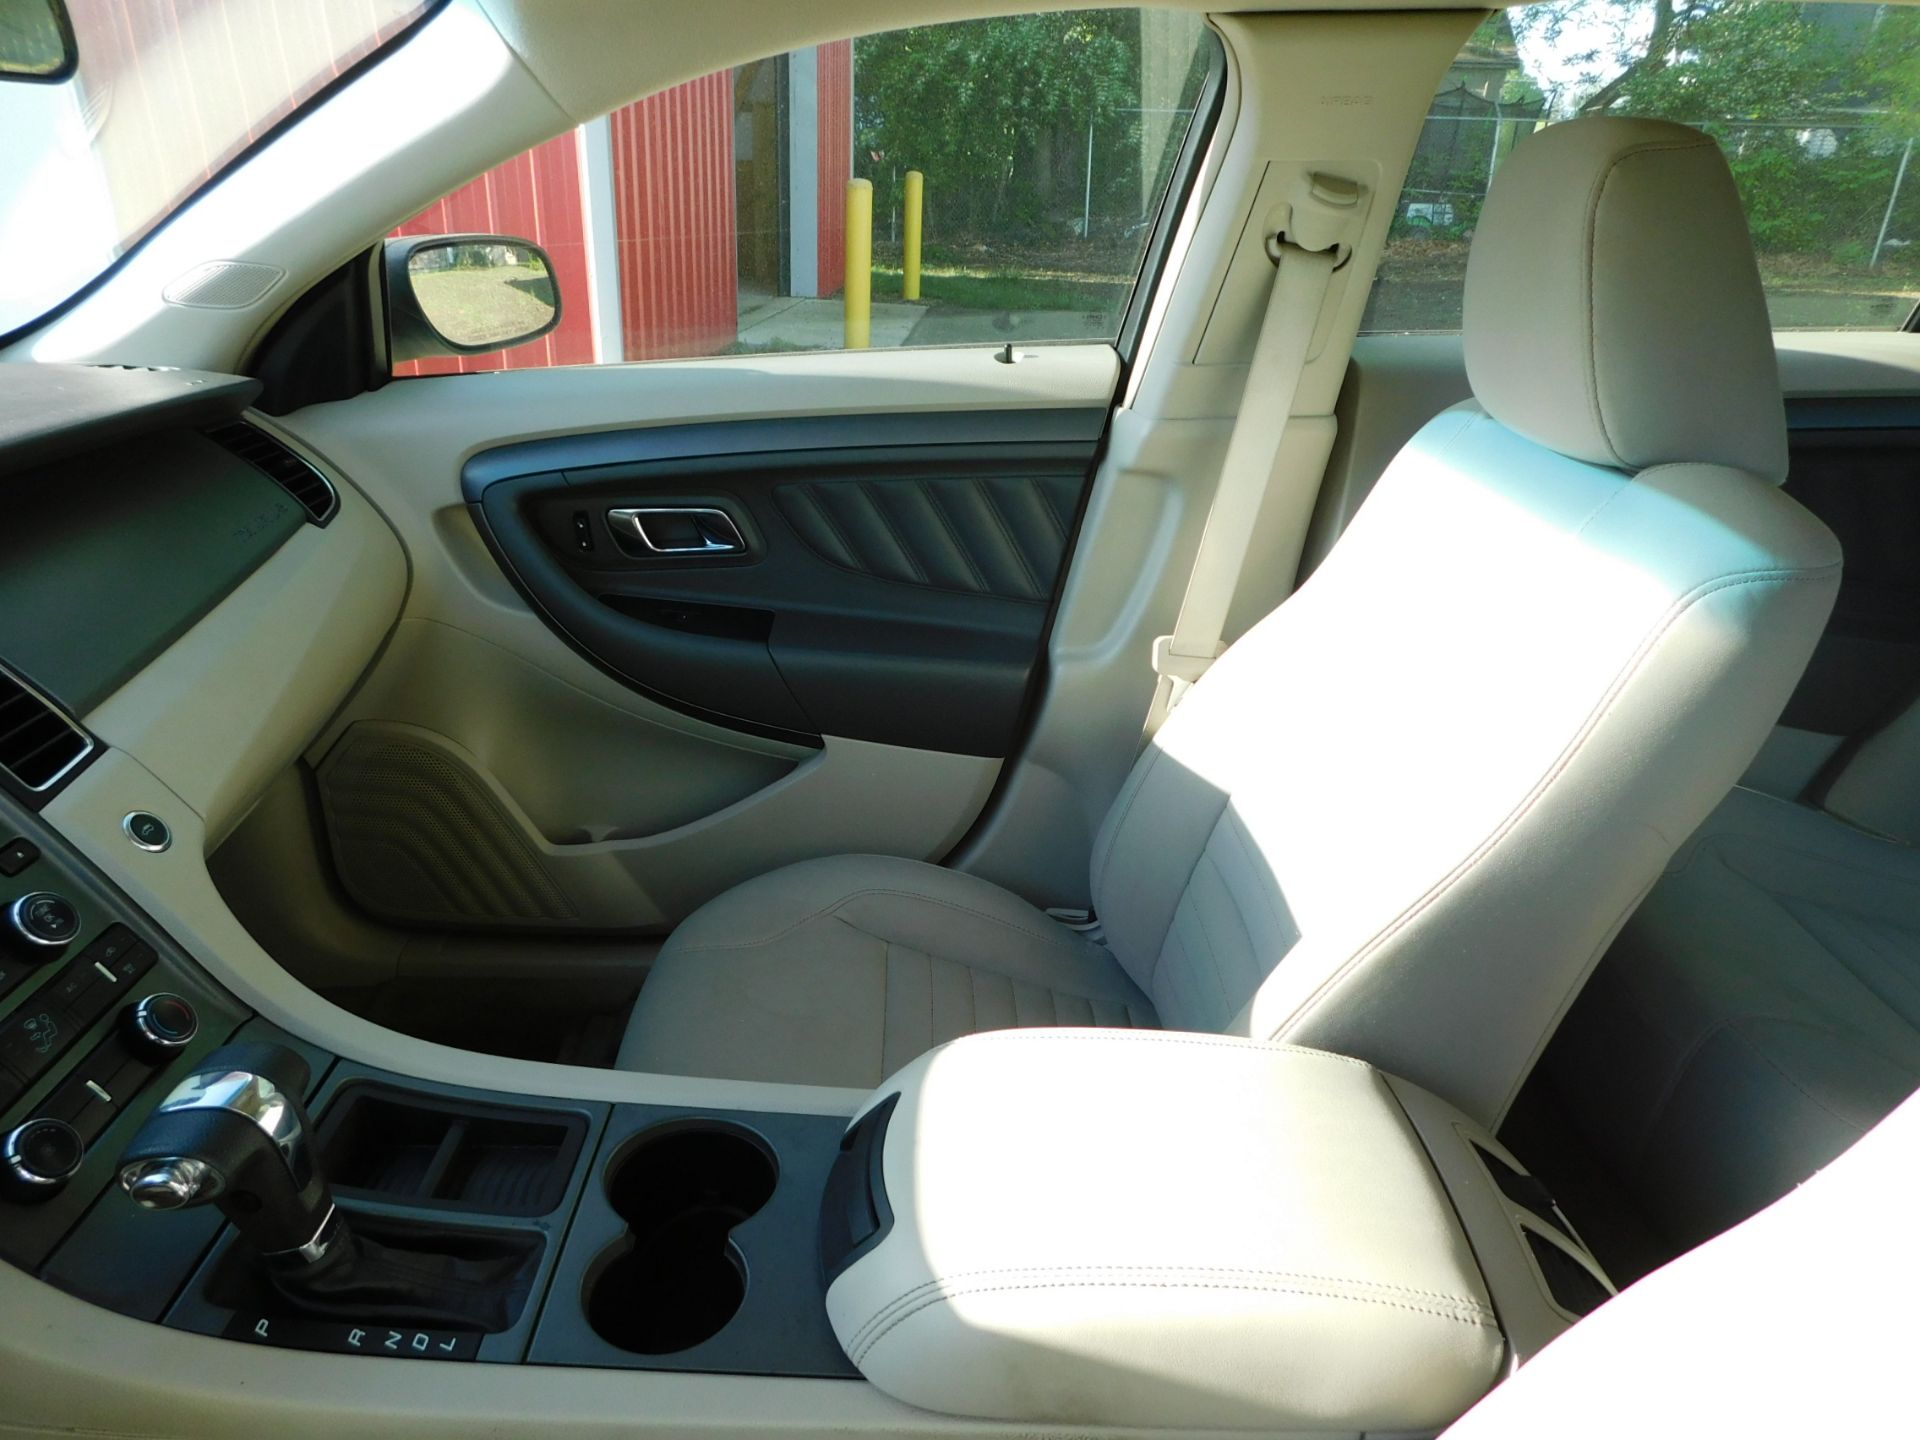 2011 Ford Taurus 4-Door Sedan vin 1FAHP2DWXBG163330, Automatic Transmission, PW,PL, AC, Cloth - Image 28 of 41